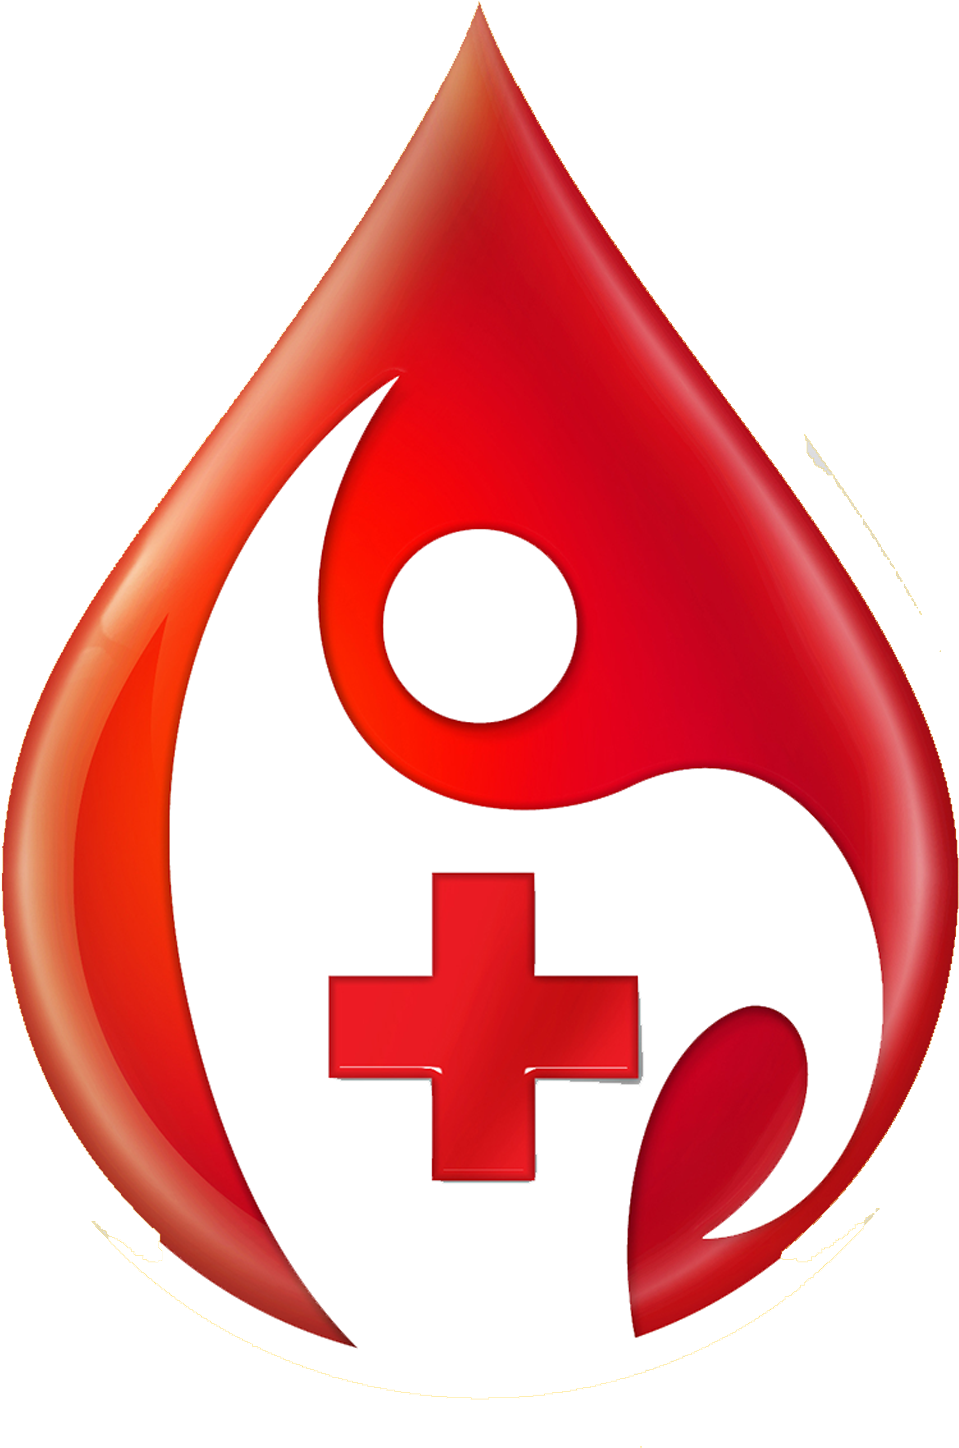 Blood Donation Camp - Blood Bank Logo Png (1485x1900)